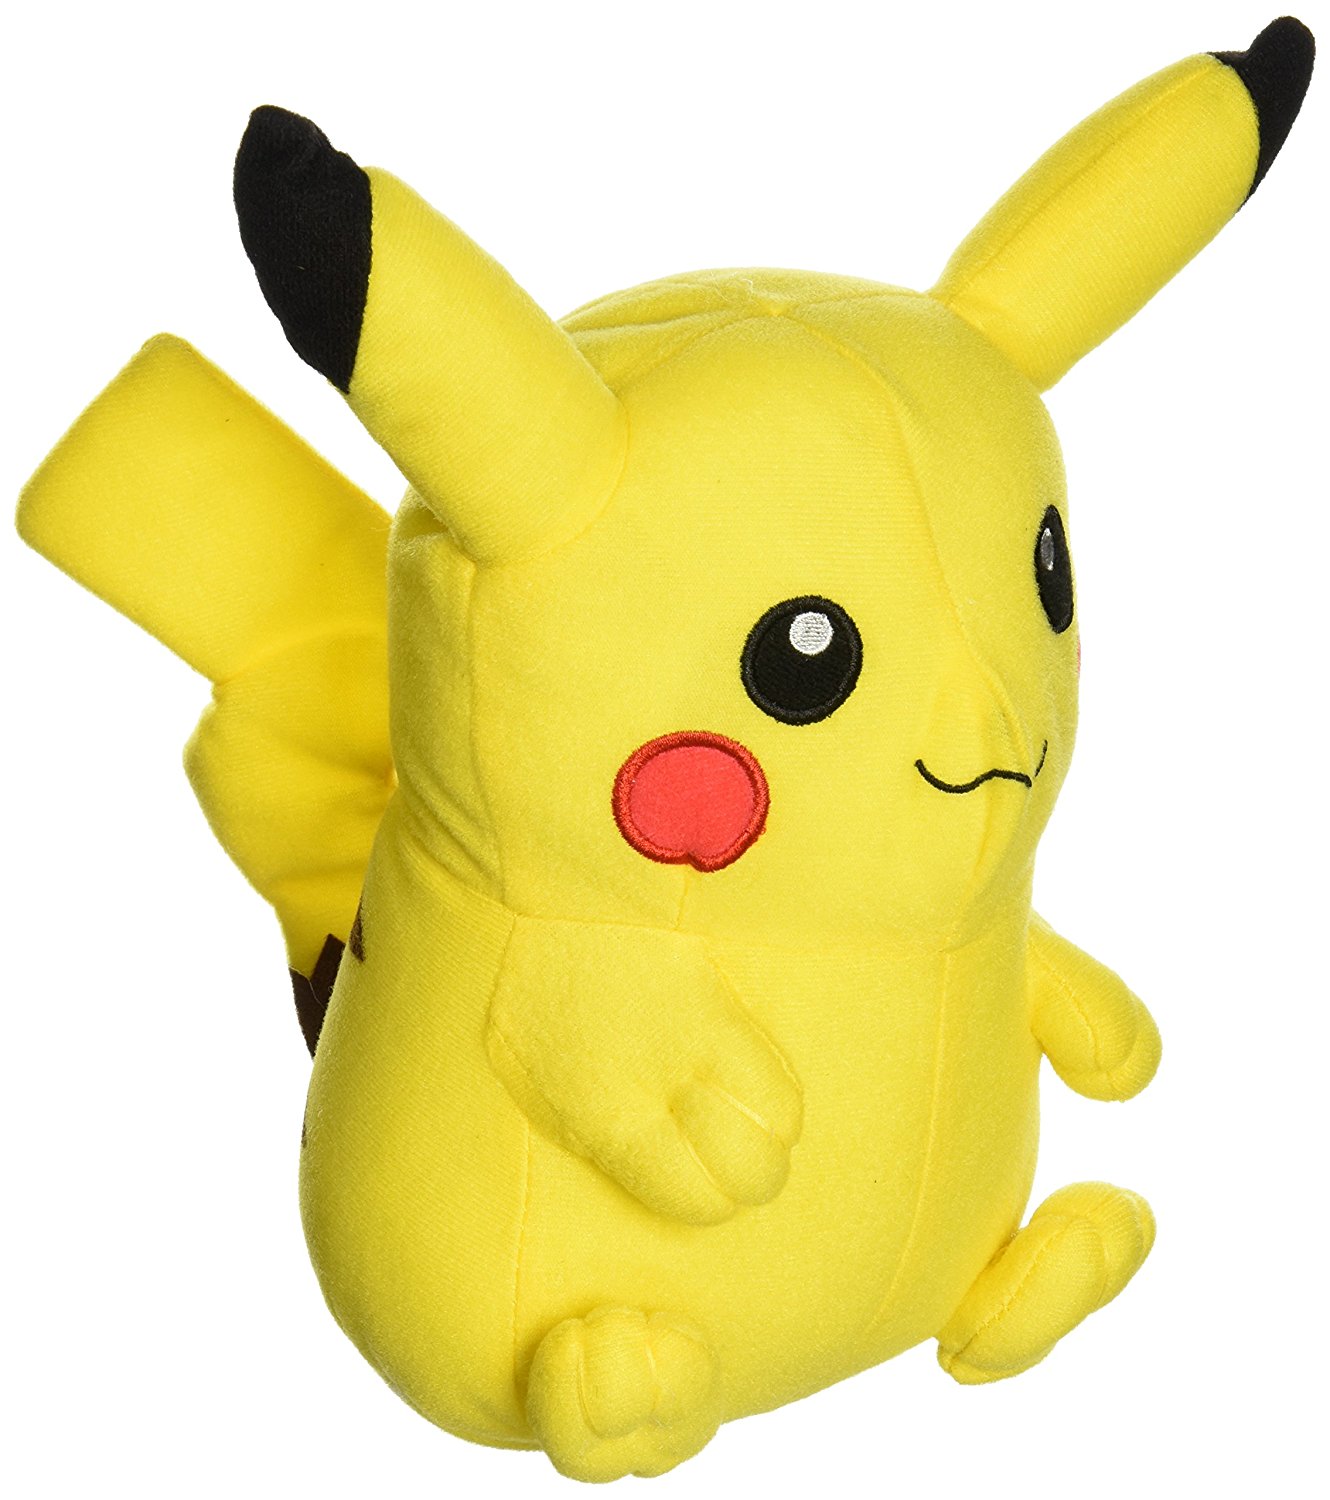 Amazon.com: Pikachu Plush Toy - Pokemon Stuffed Animal (8 Inch ...